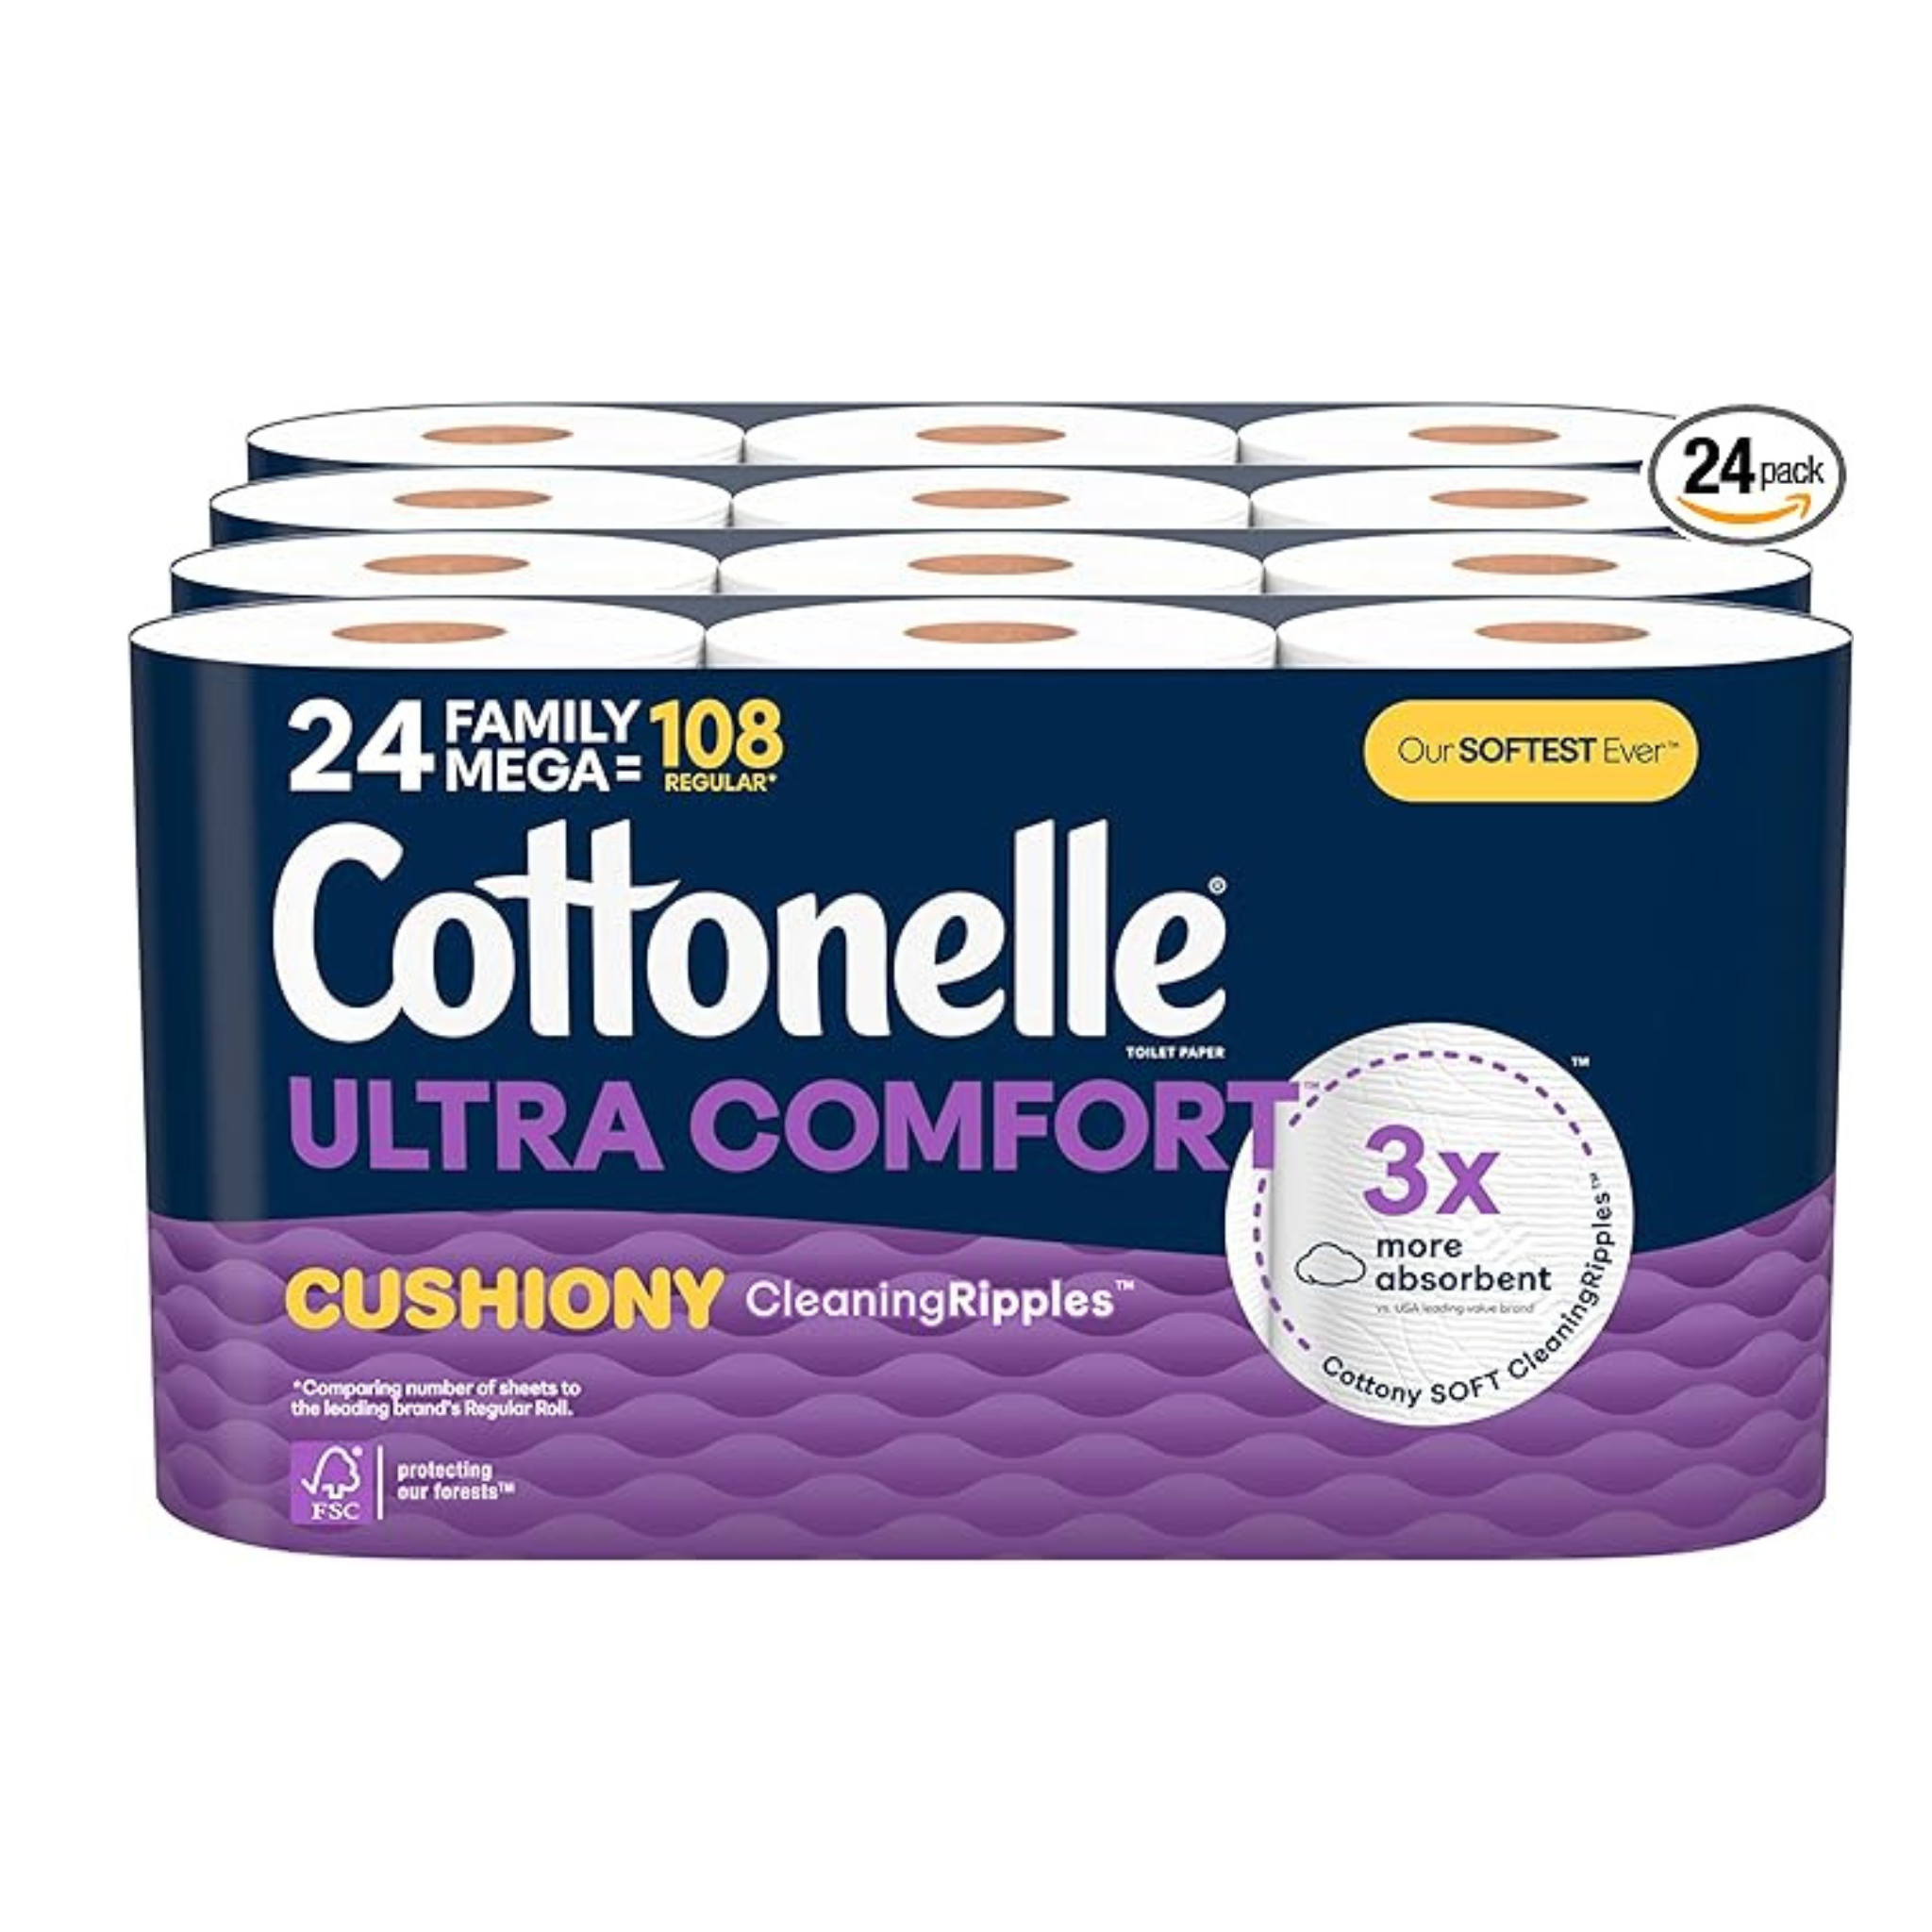 32-Count Cottonelle Toilet Paper Family Mega Rolls (Ultra Comfort)